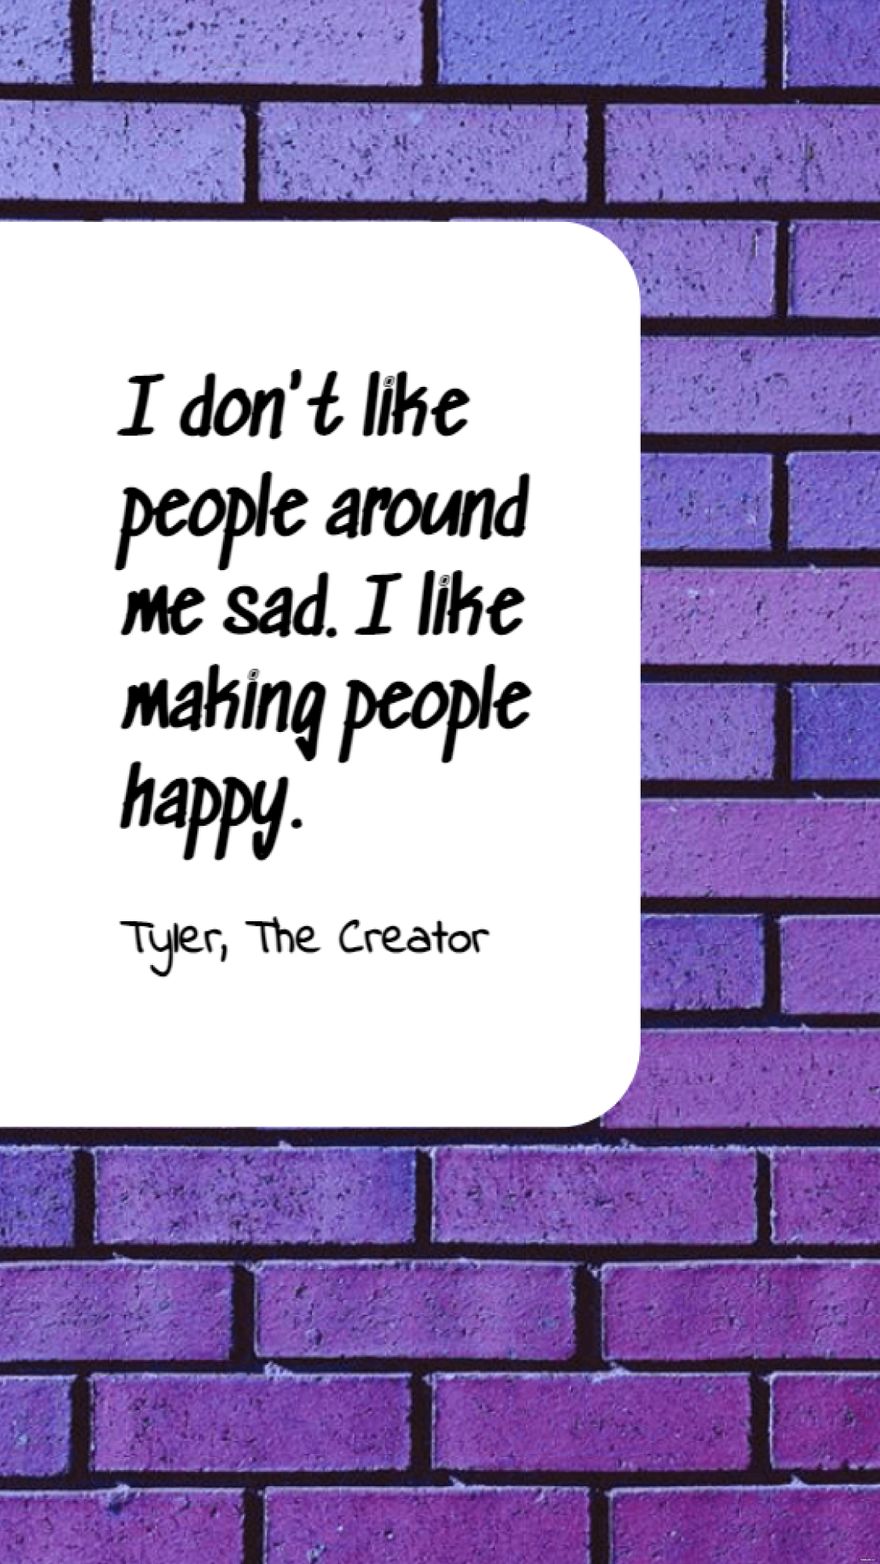 Tyler, The Creator - I don't like people around me sad. I like making people happy.